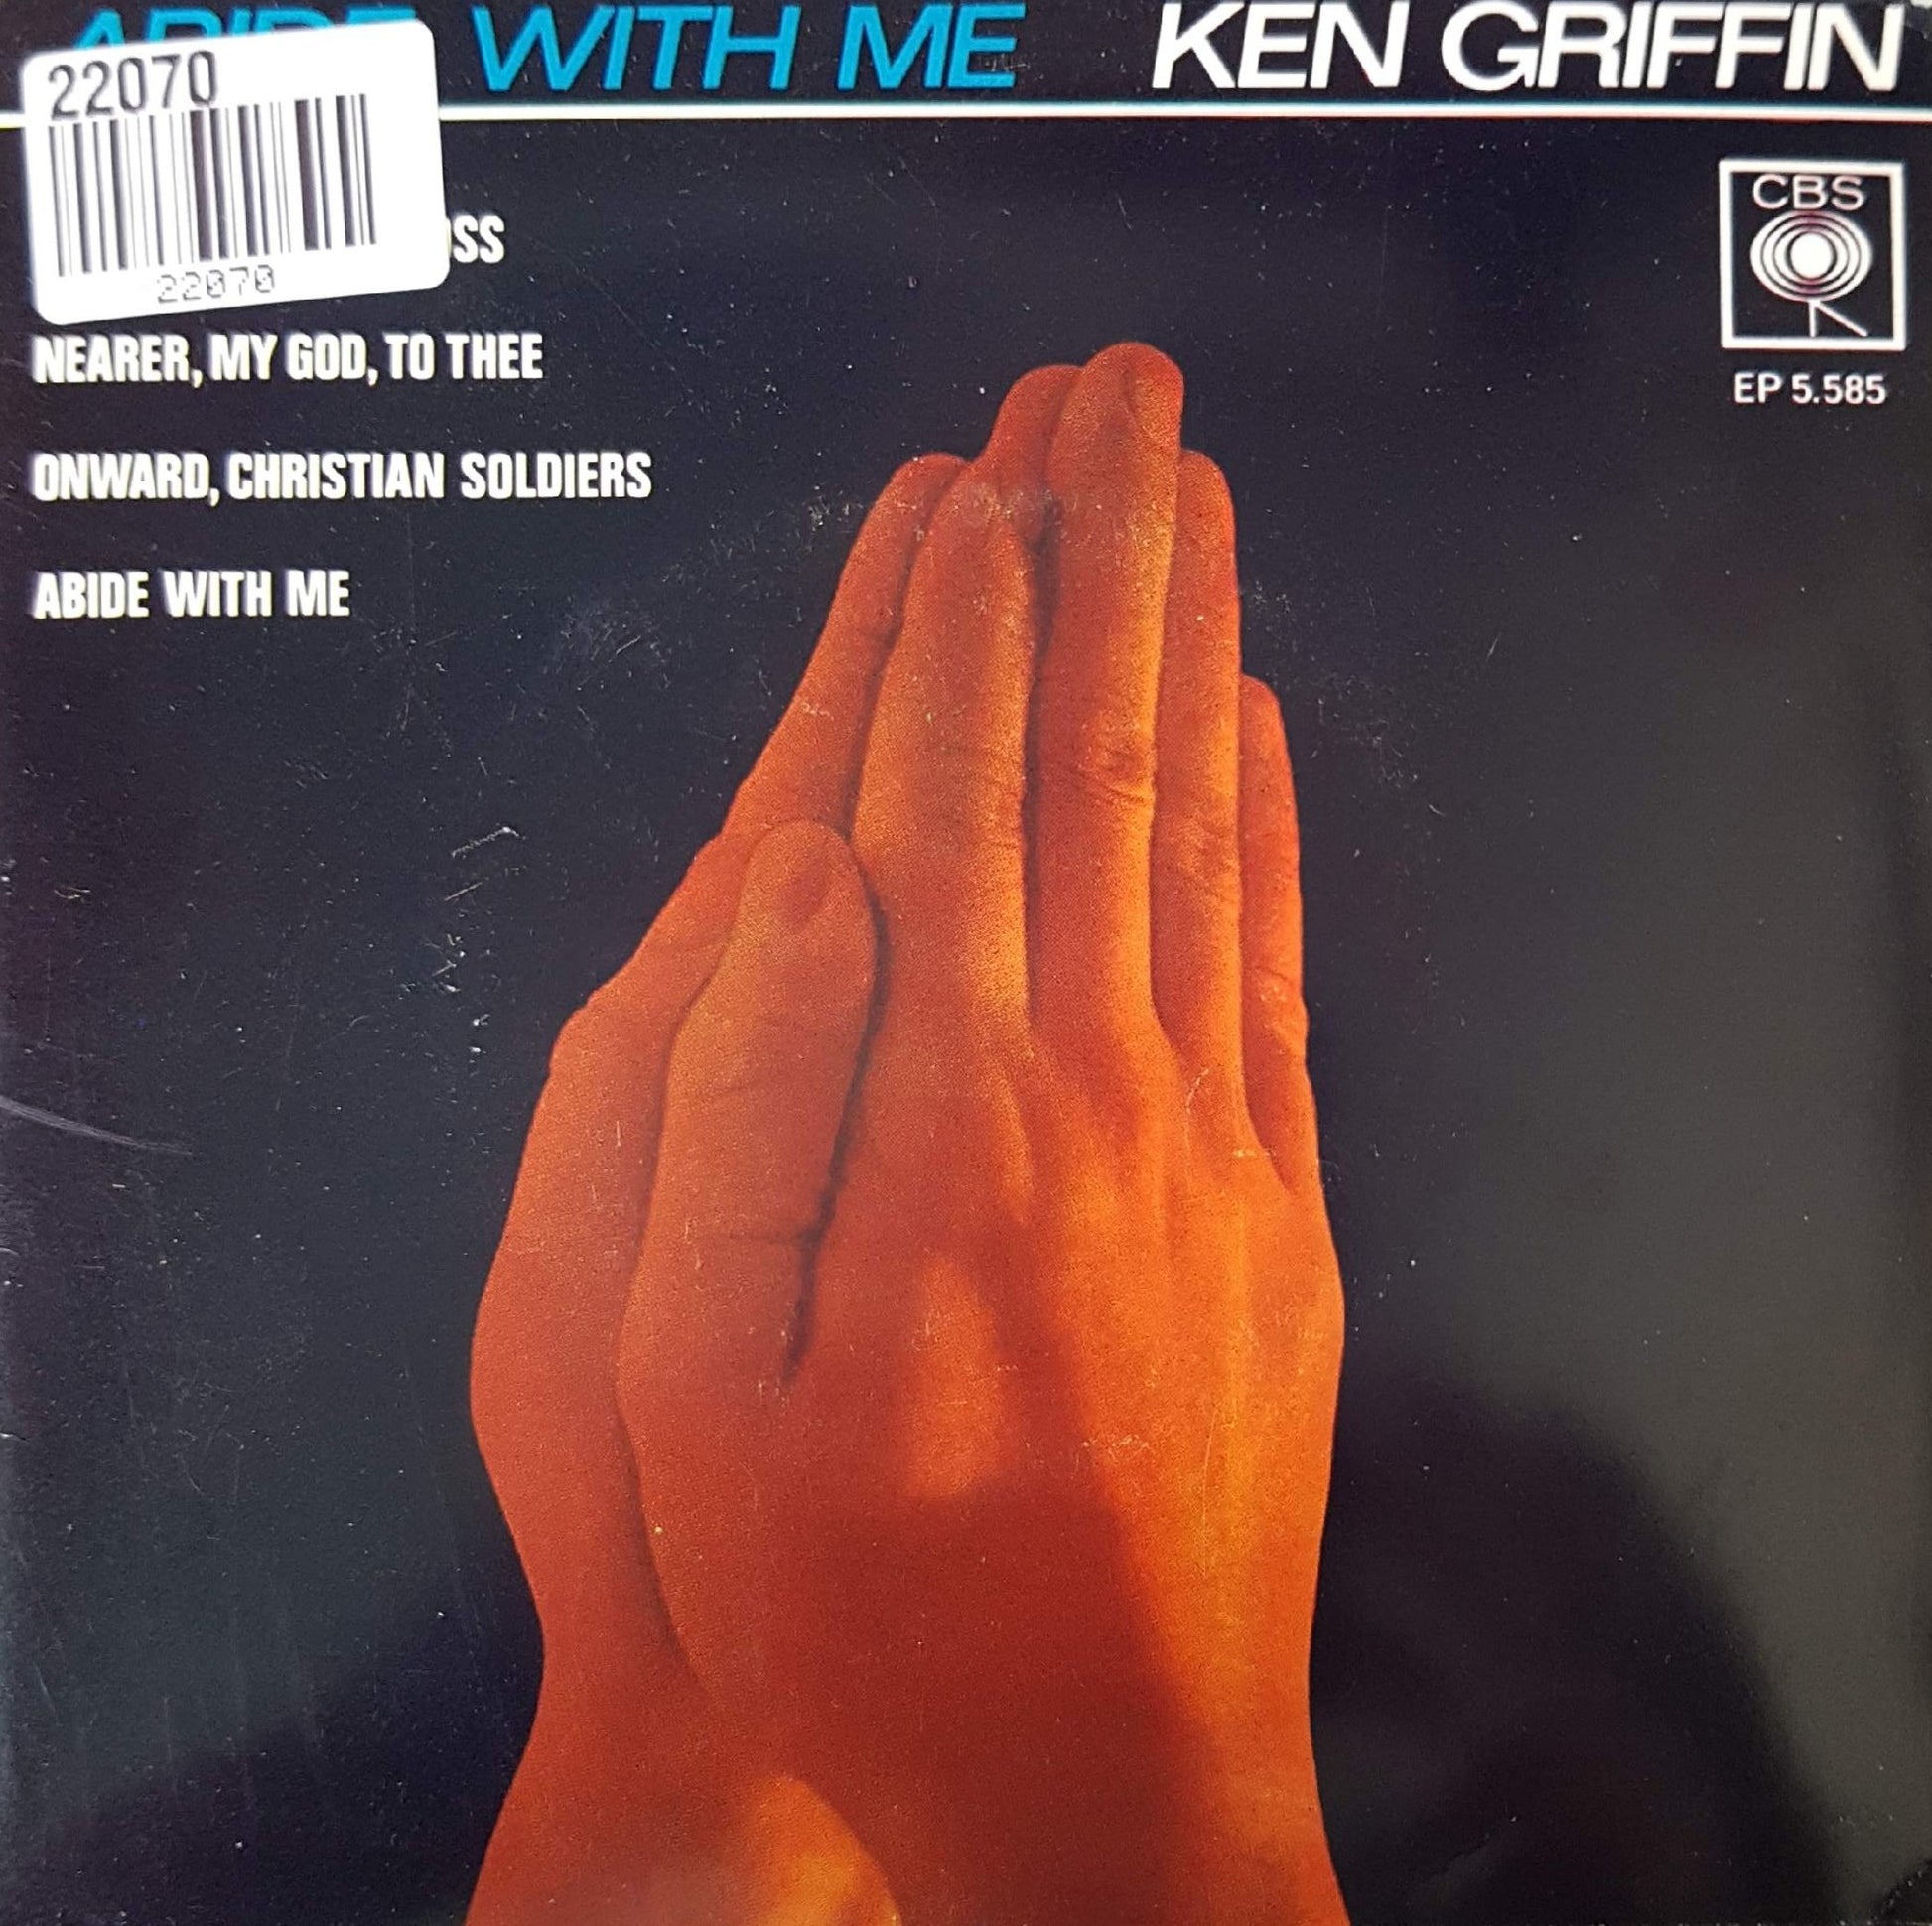 Ken Griffin - The Old Rugged Cross 22070 Vinyl Singles VINYLSINGLES.NL